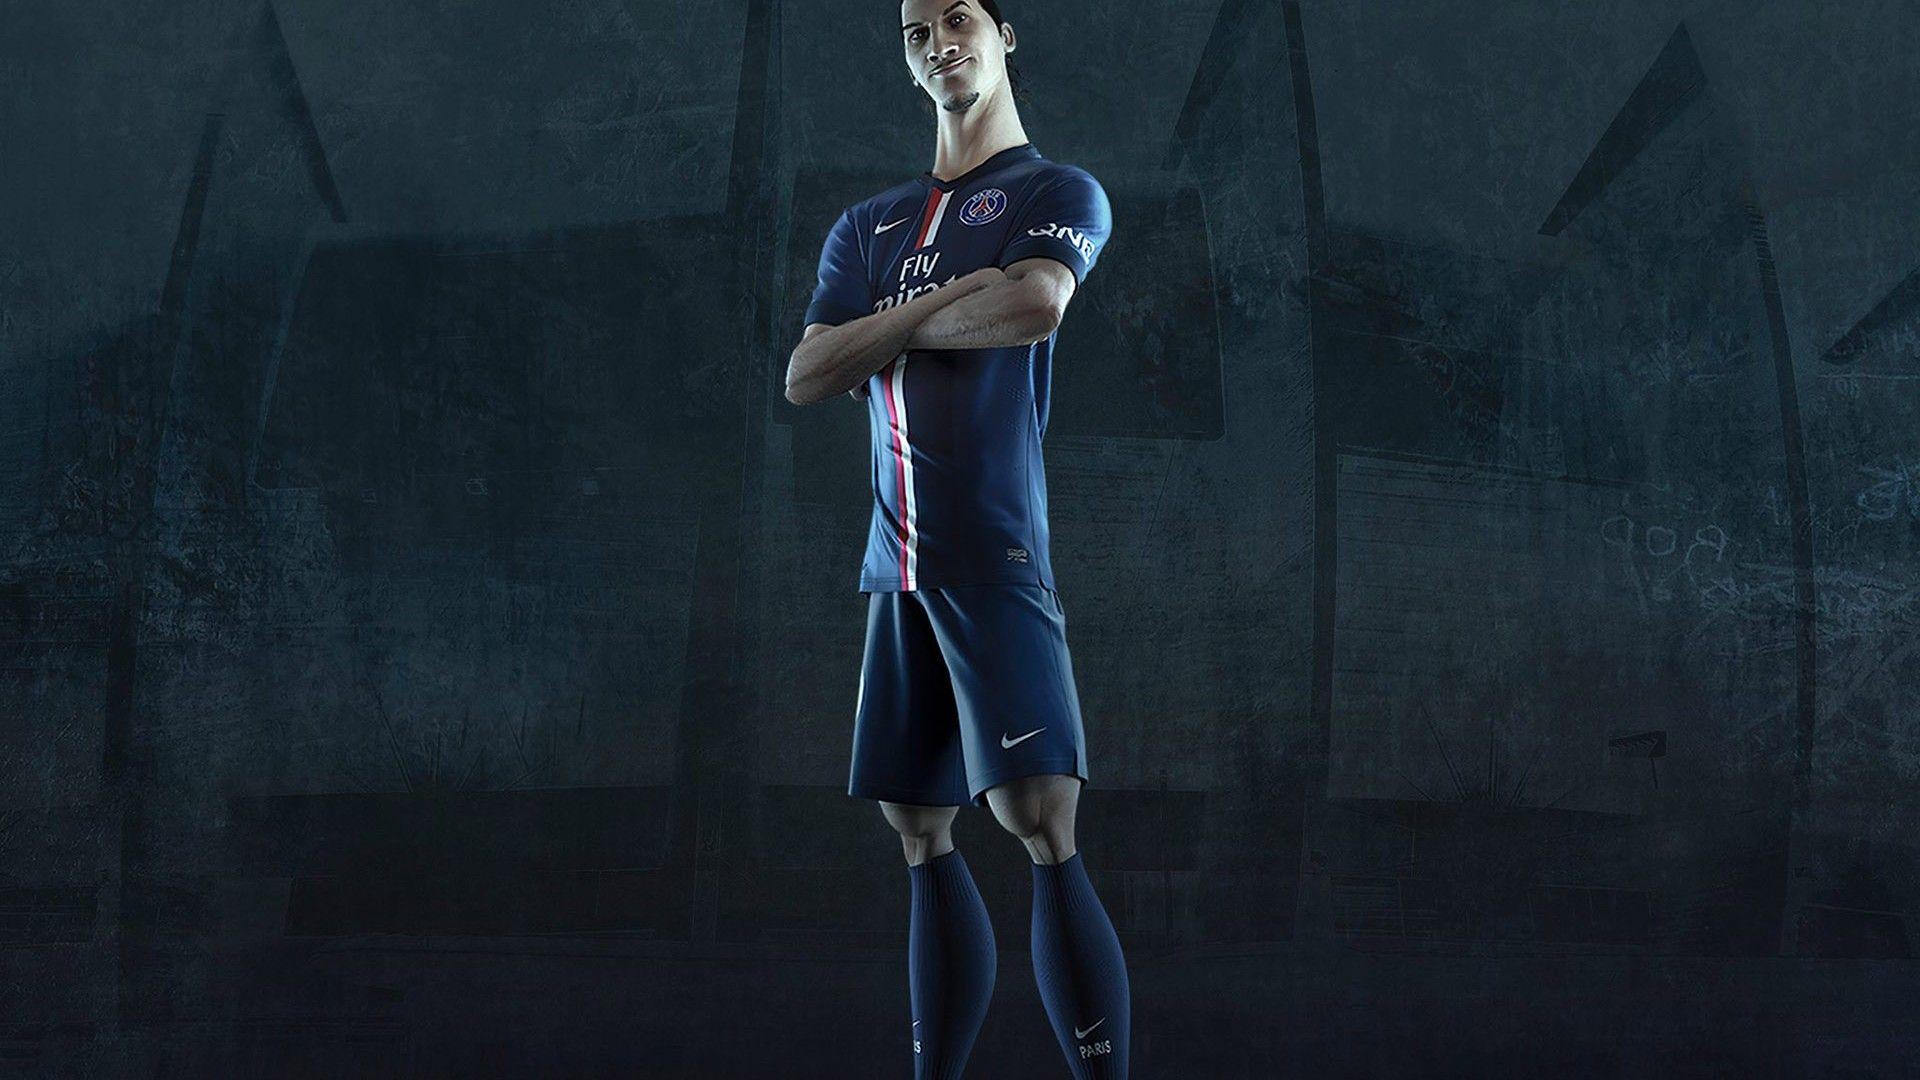 Zlatan Ibrahimovic PSG Jersey 2014 2015 Home Kit Wallpaper Wide Or